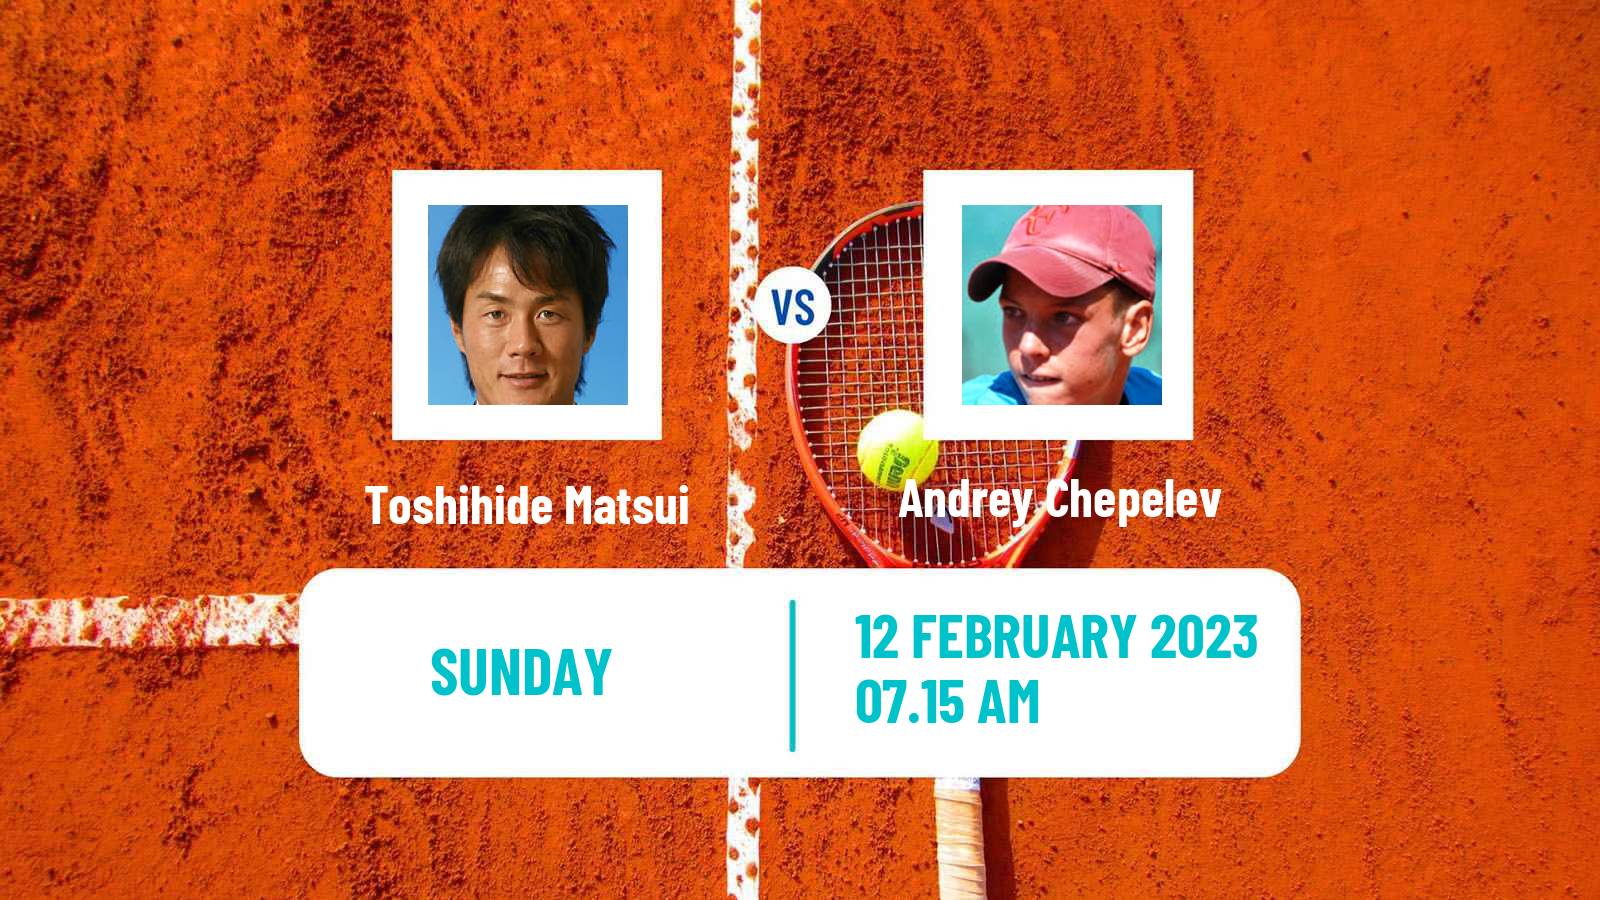 Tennis ATP Challenger Toshihide Matsui - Andrey Chepelev